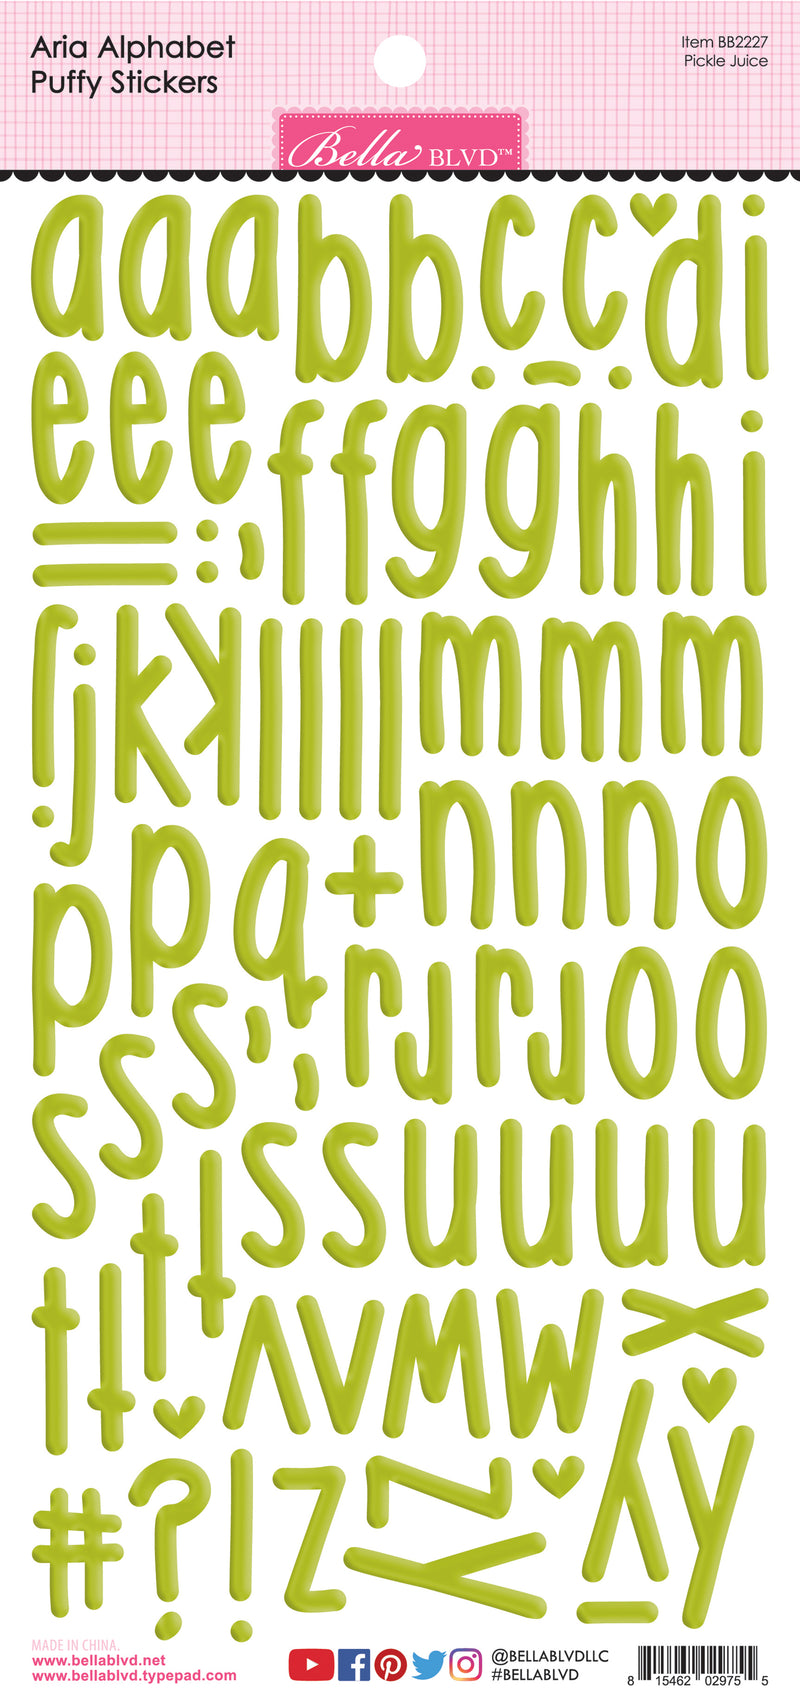 Aria Alphabet Puffy Stickers - Pickle Juice